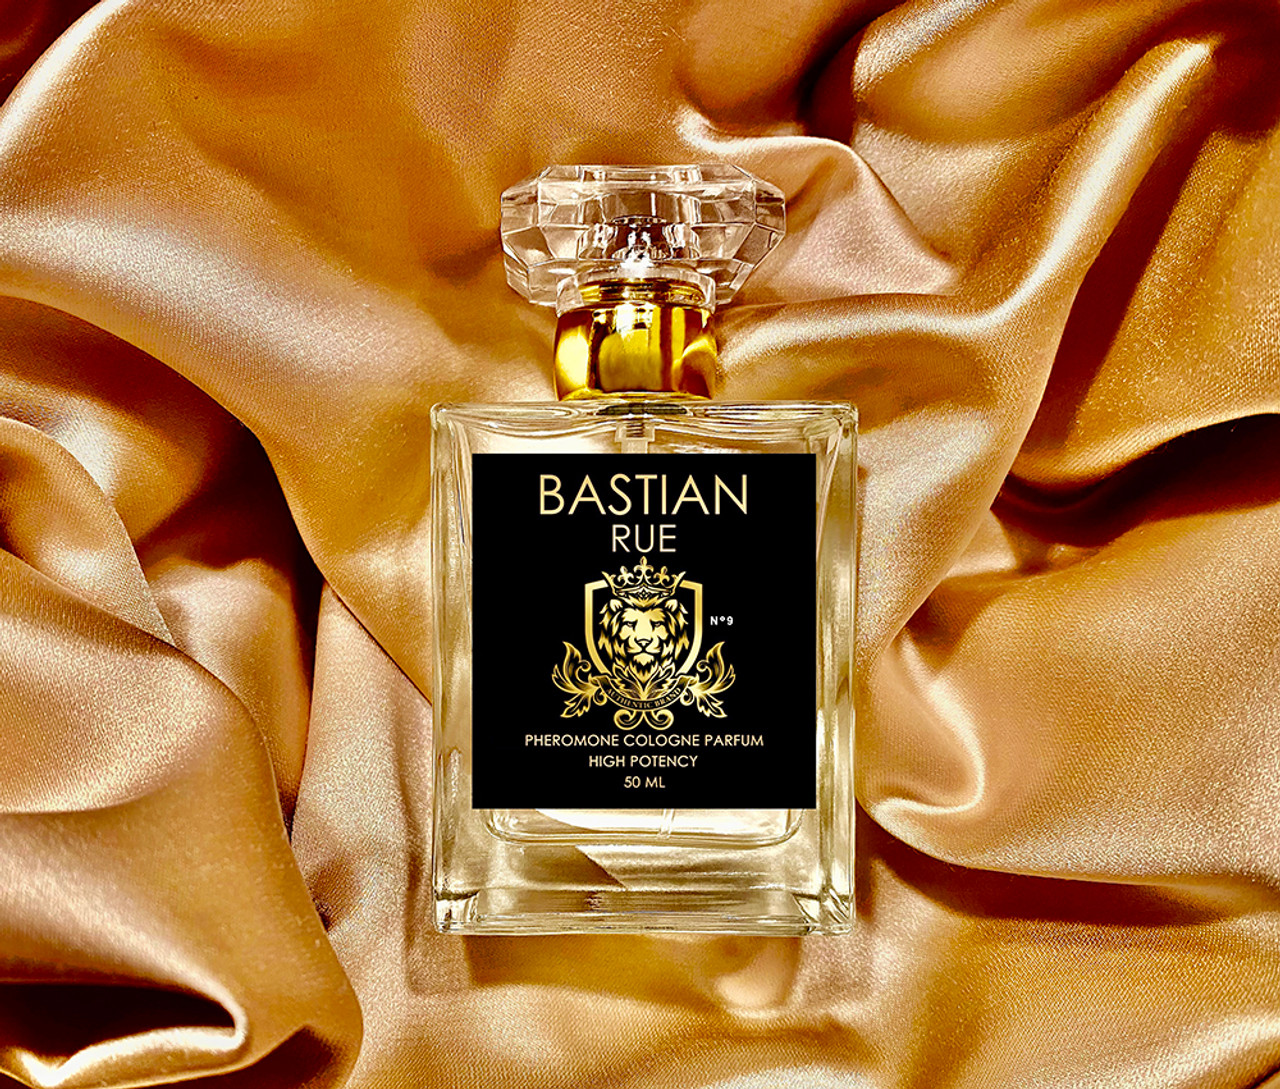  N o 9 Bask Pheromone Perfume (1.75 oz.) for Women to